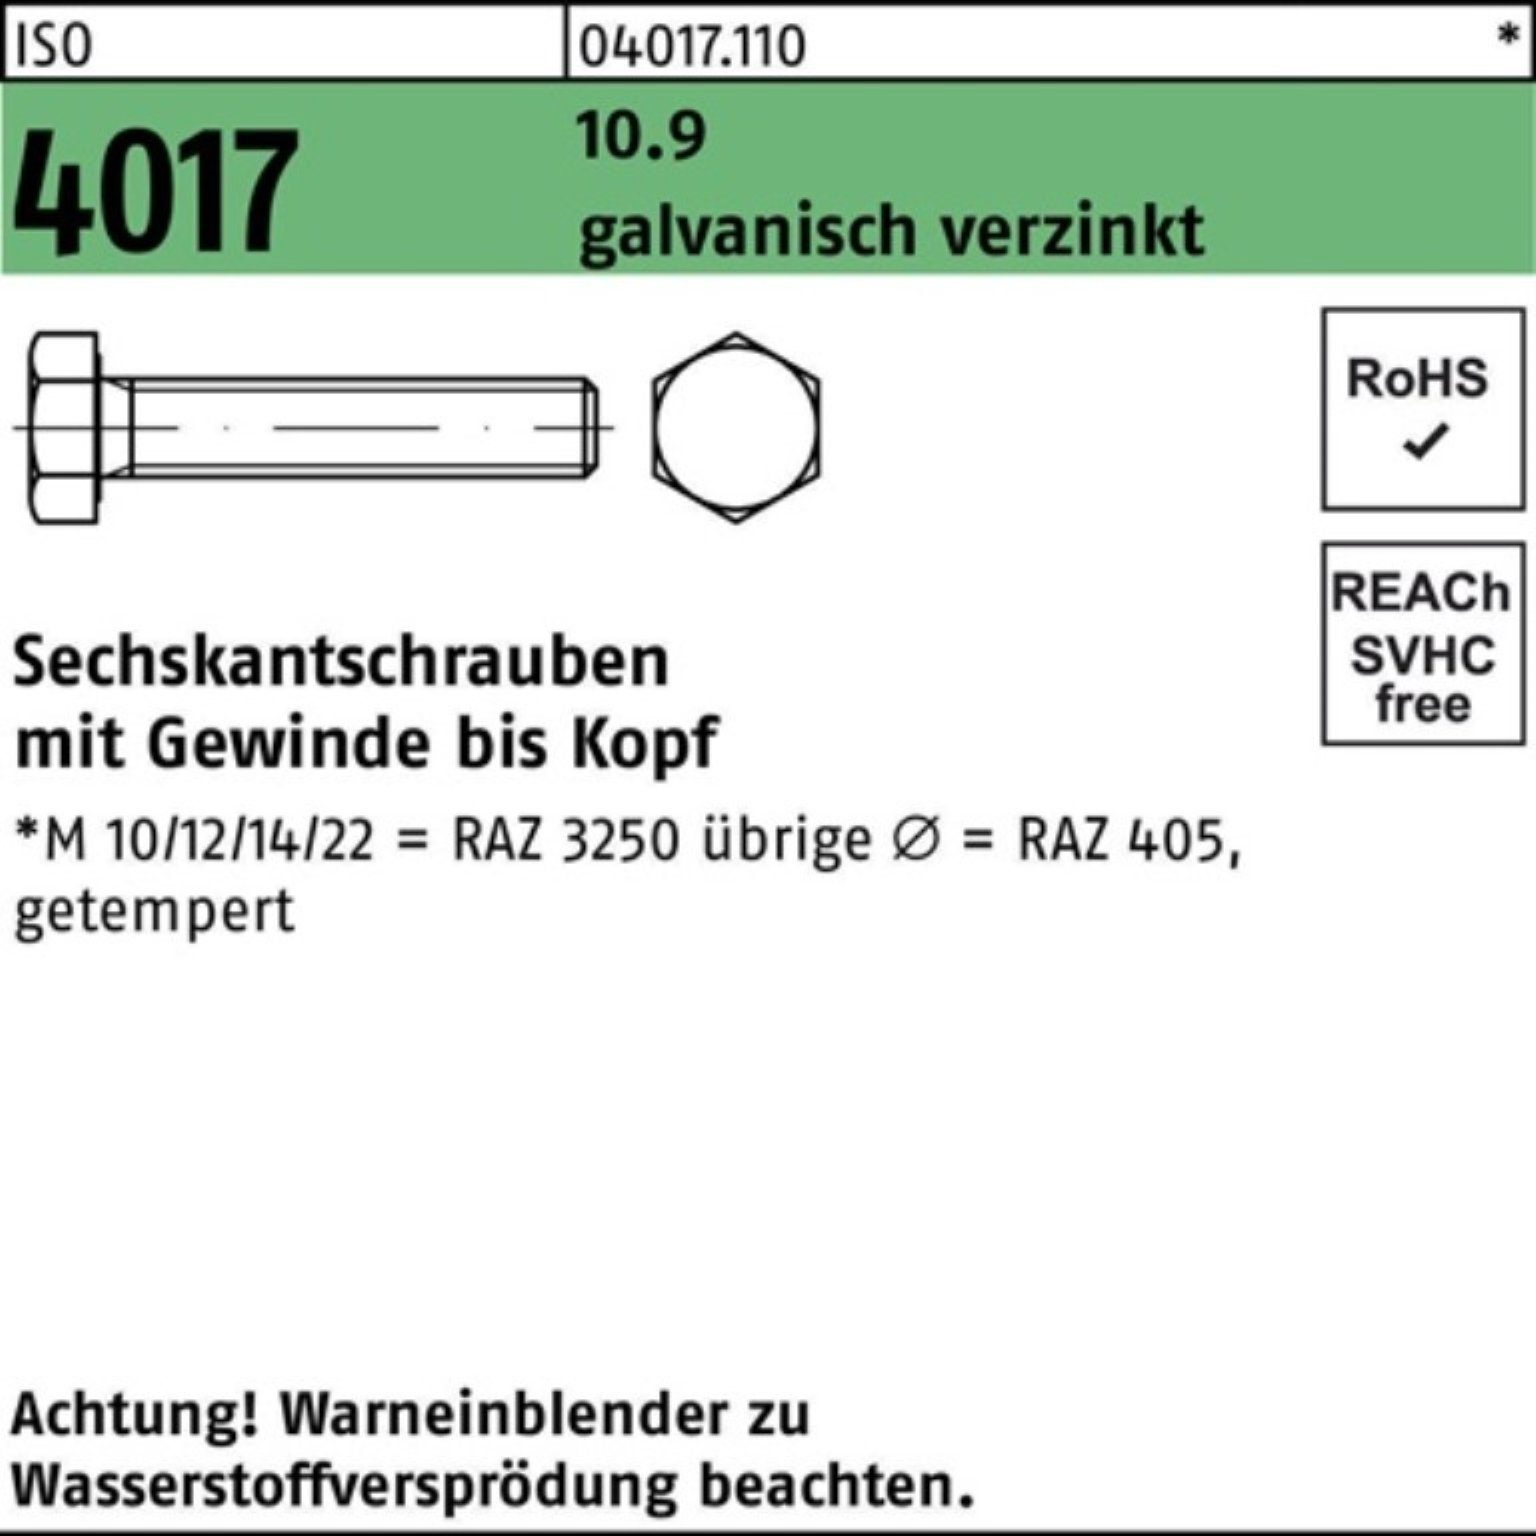 VG St Sechskantschraube Pack 4017 130 Bufab galv.verz. 1 Sechskantschraube ISO 10.9 100er M27x